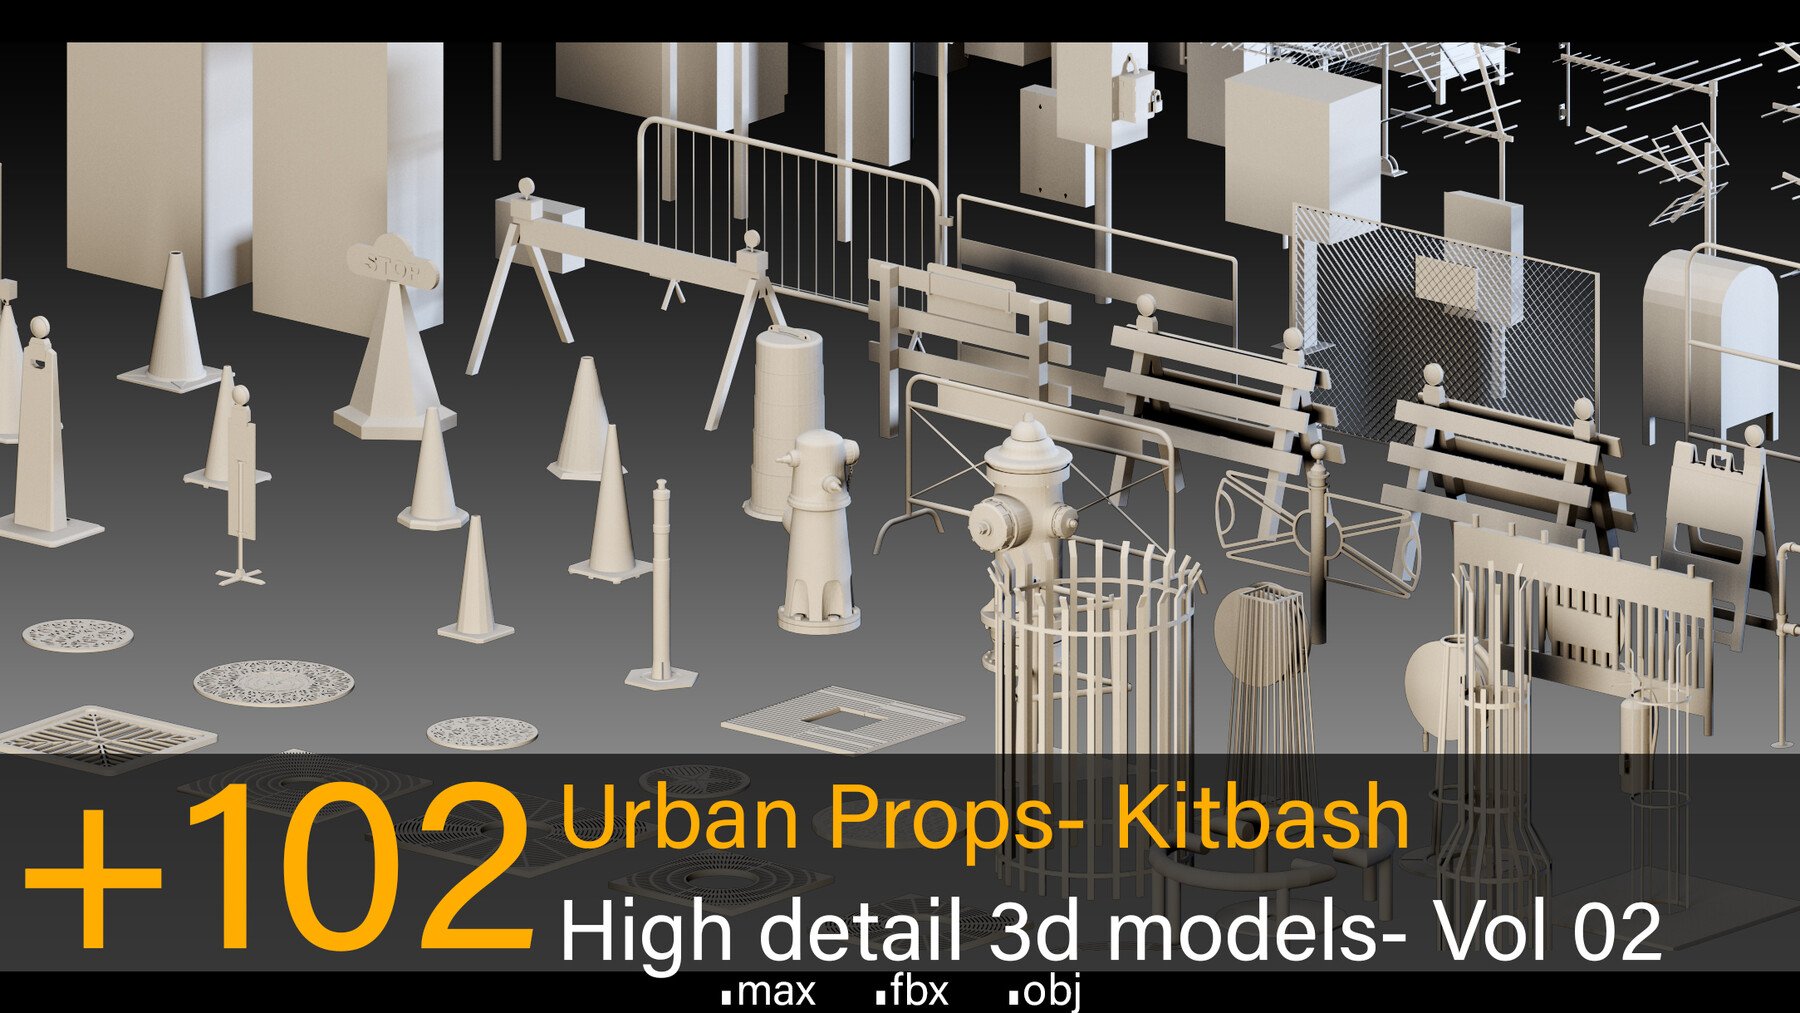 +102 Urban Props- Vol 02- Kitbash- High detail 3d models